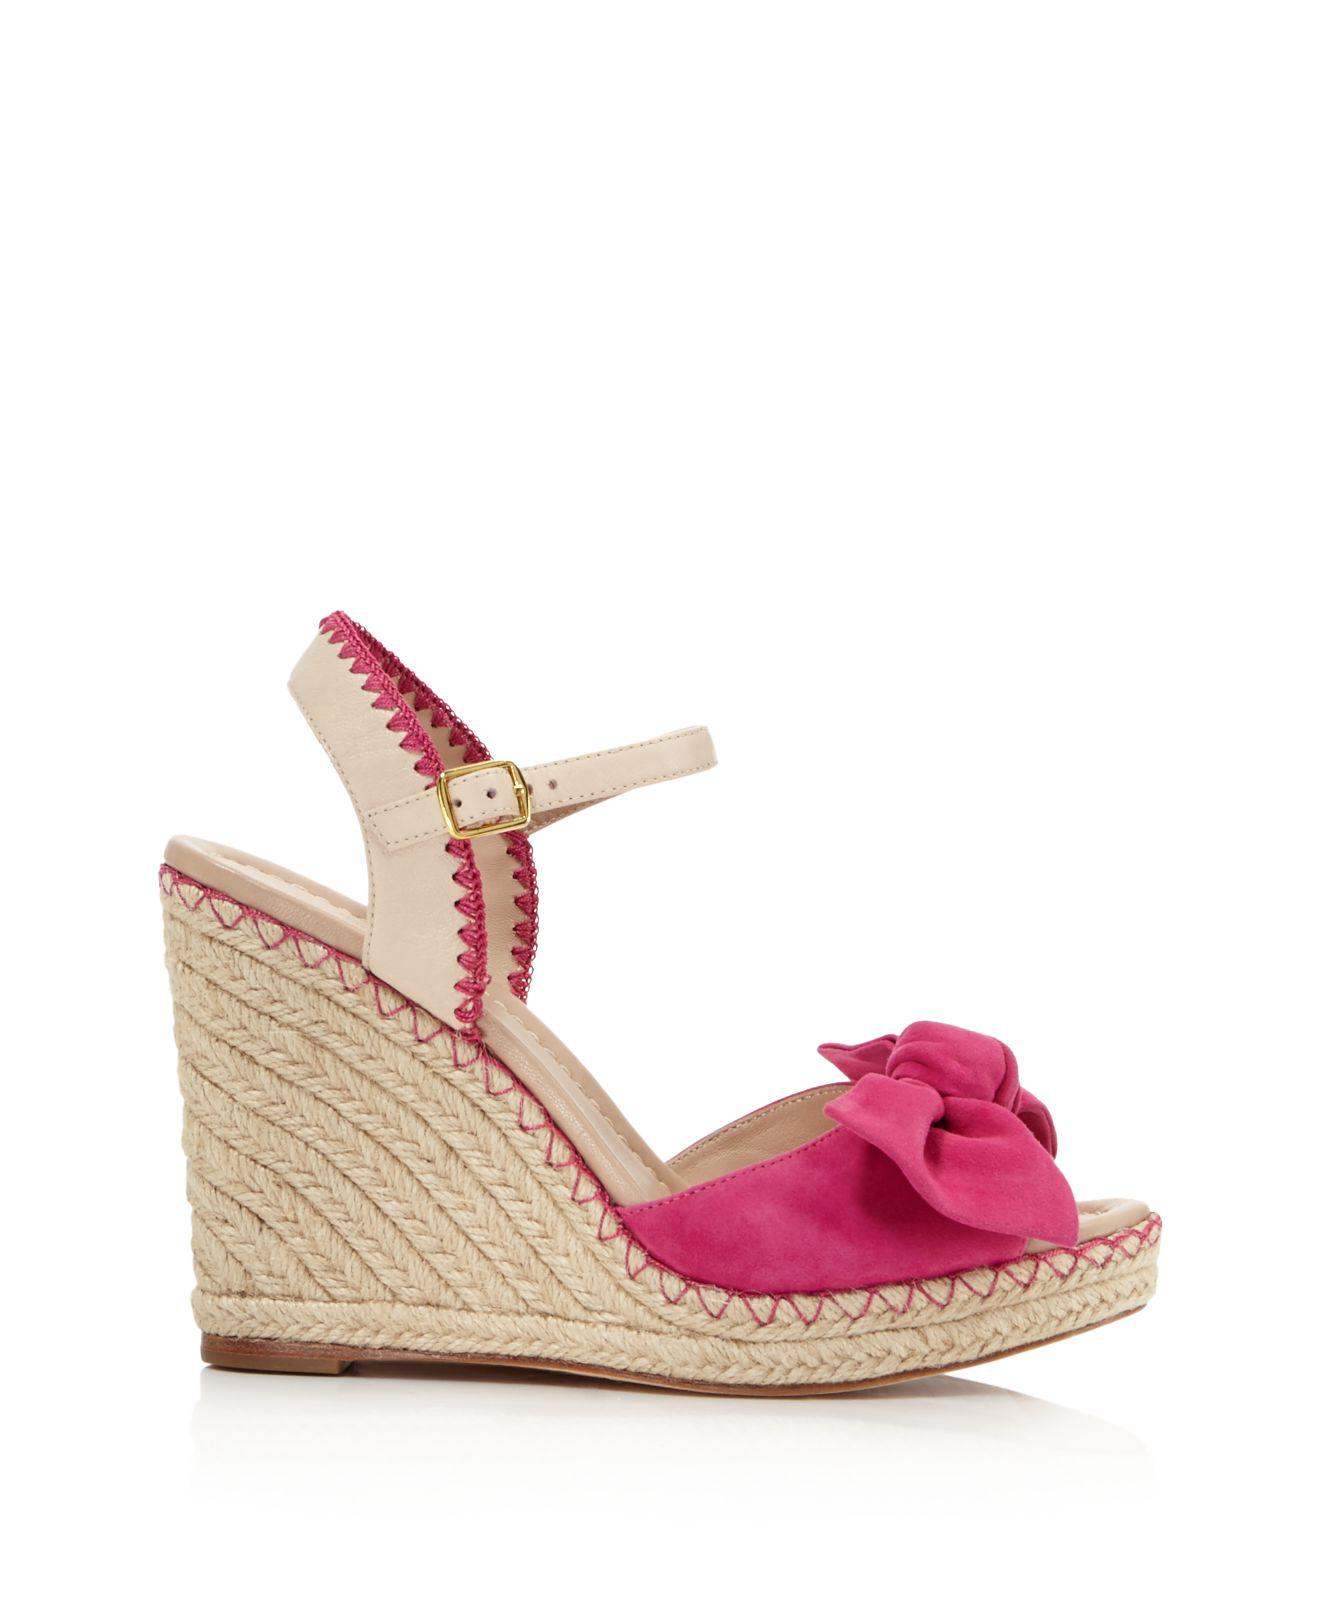 Lyst - Kate Spade Jane Espadrille Platform Wedge Sandals in Pink